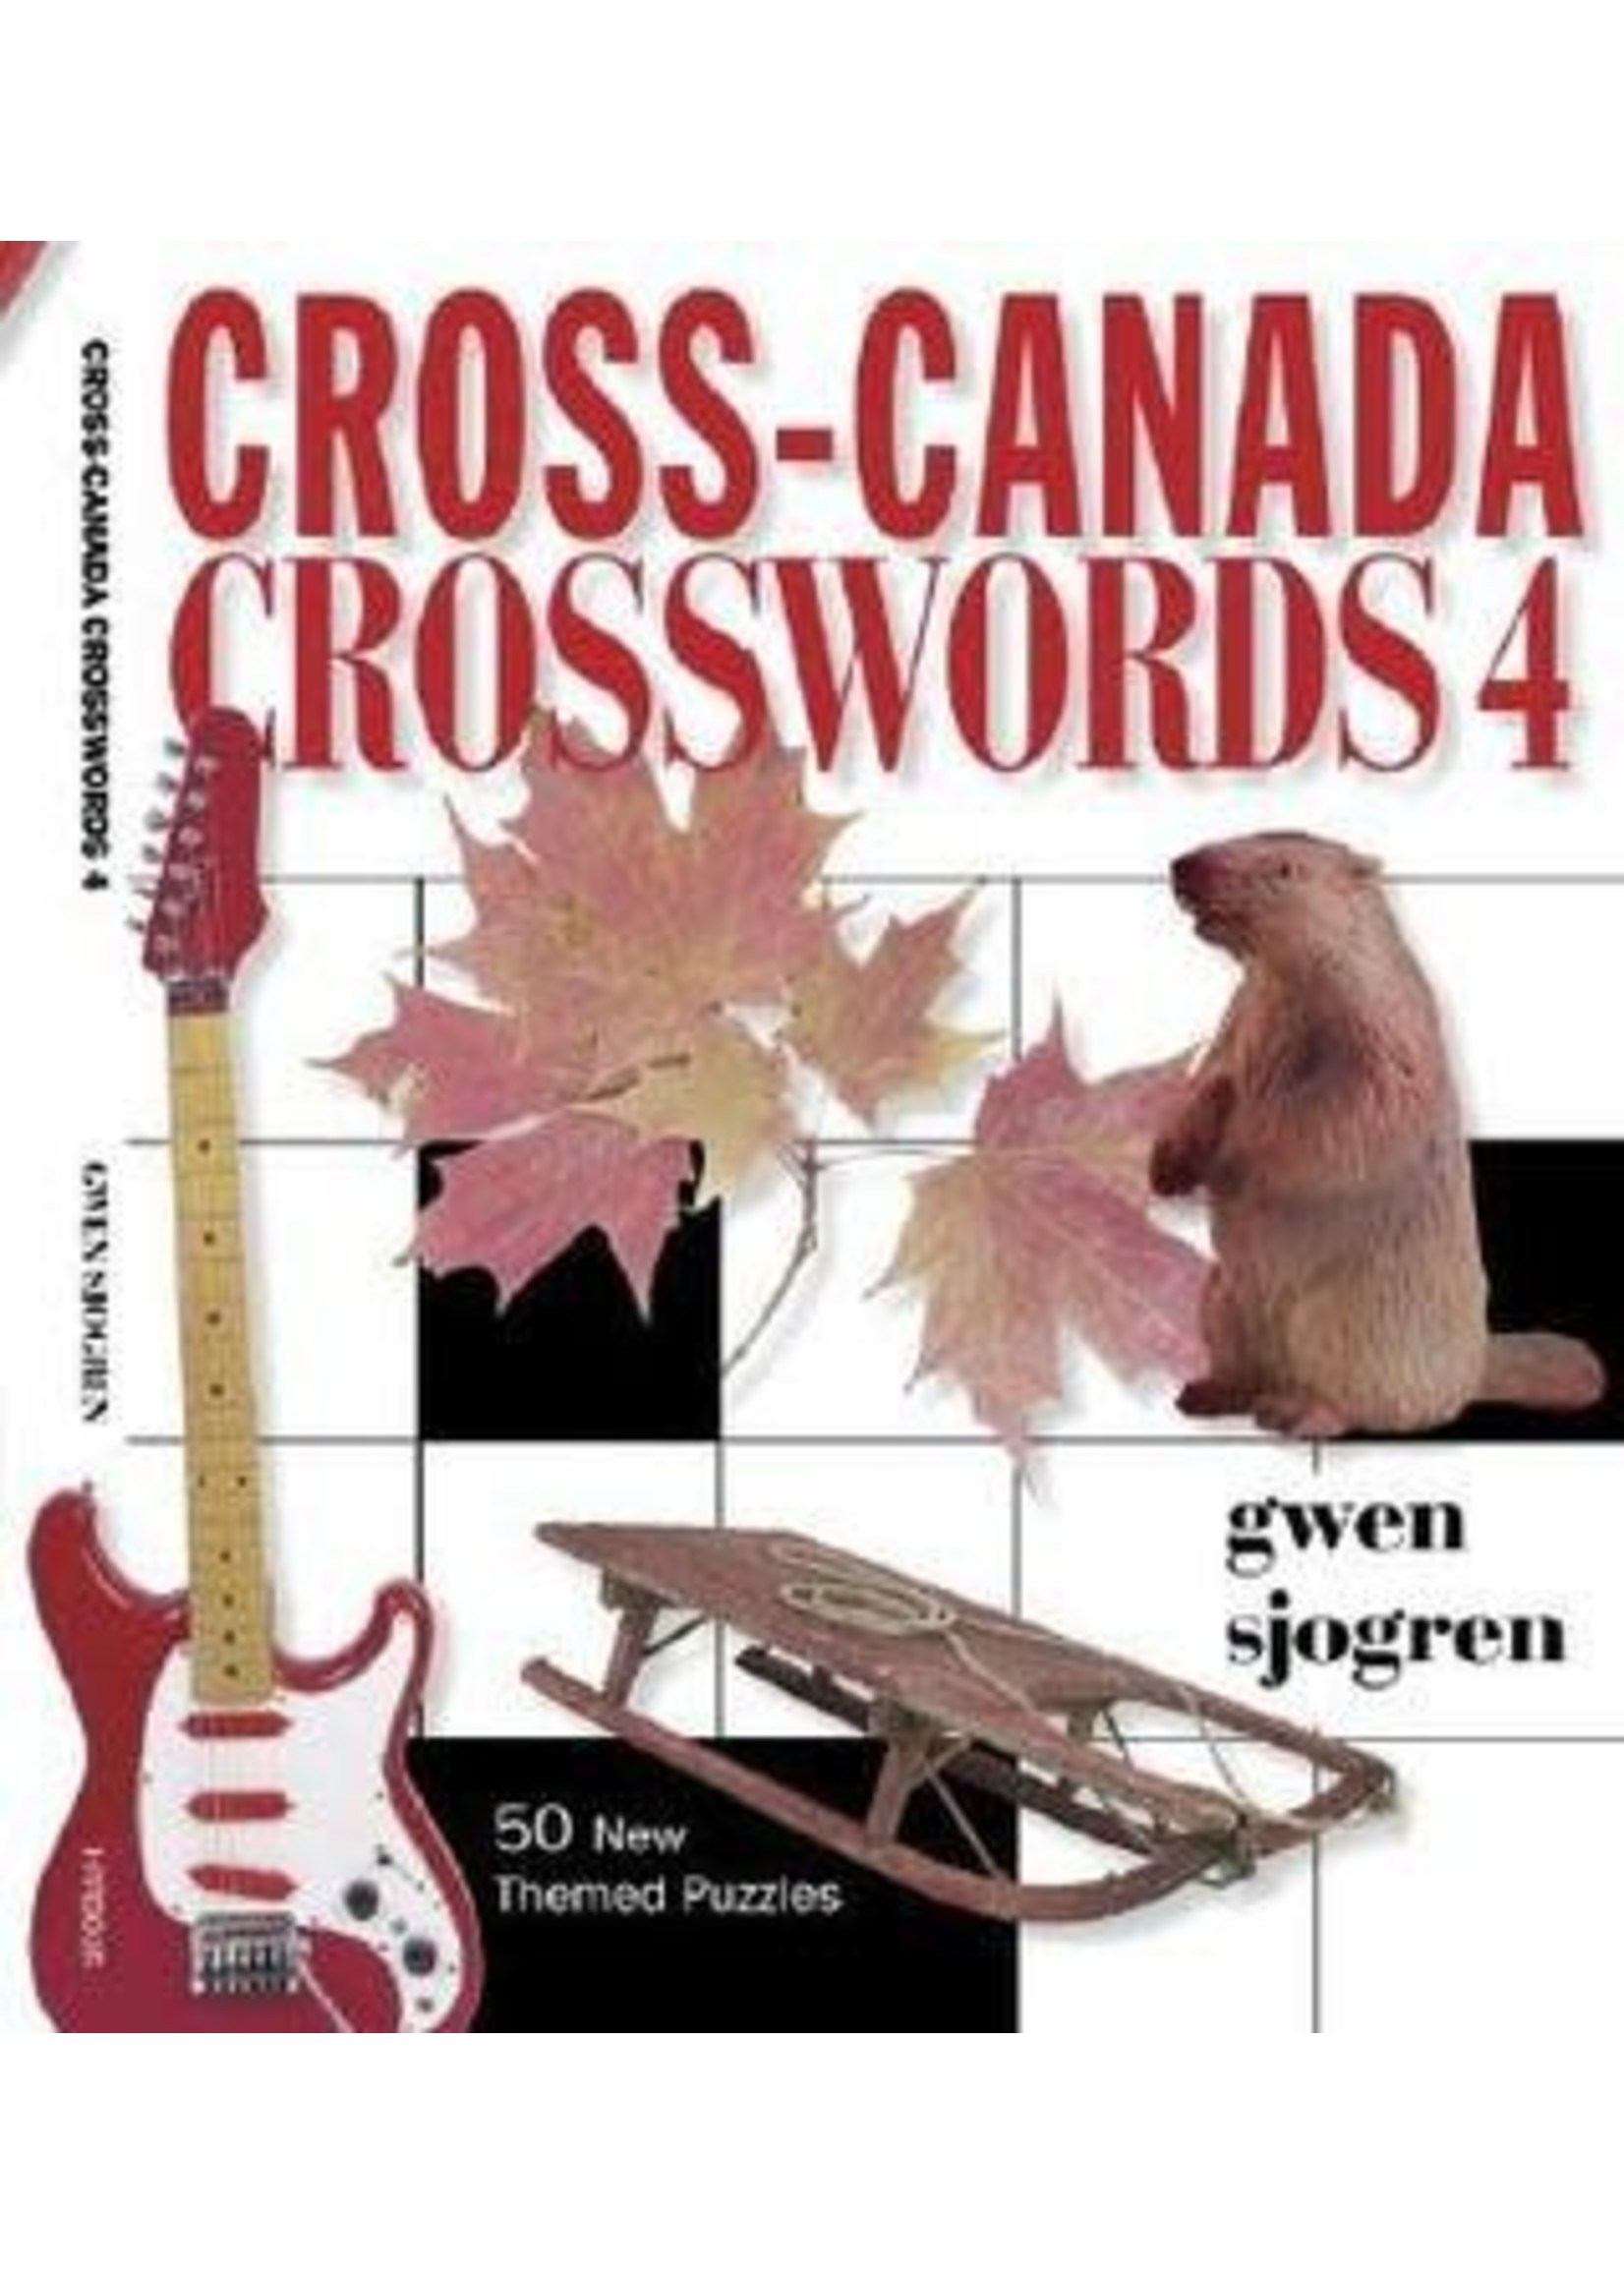 Cross-Canada Crosswords 4: 50 New Themed Puzzles by Gwen Sjogren